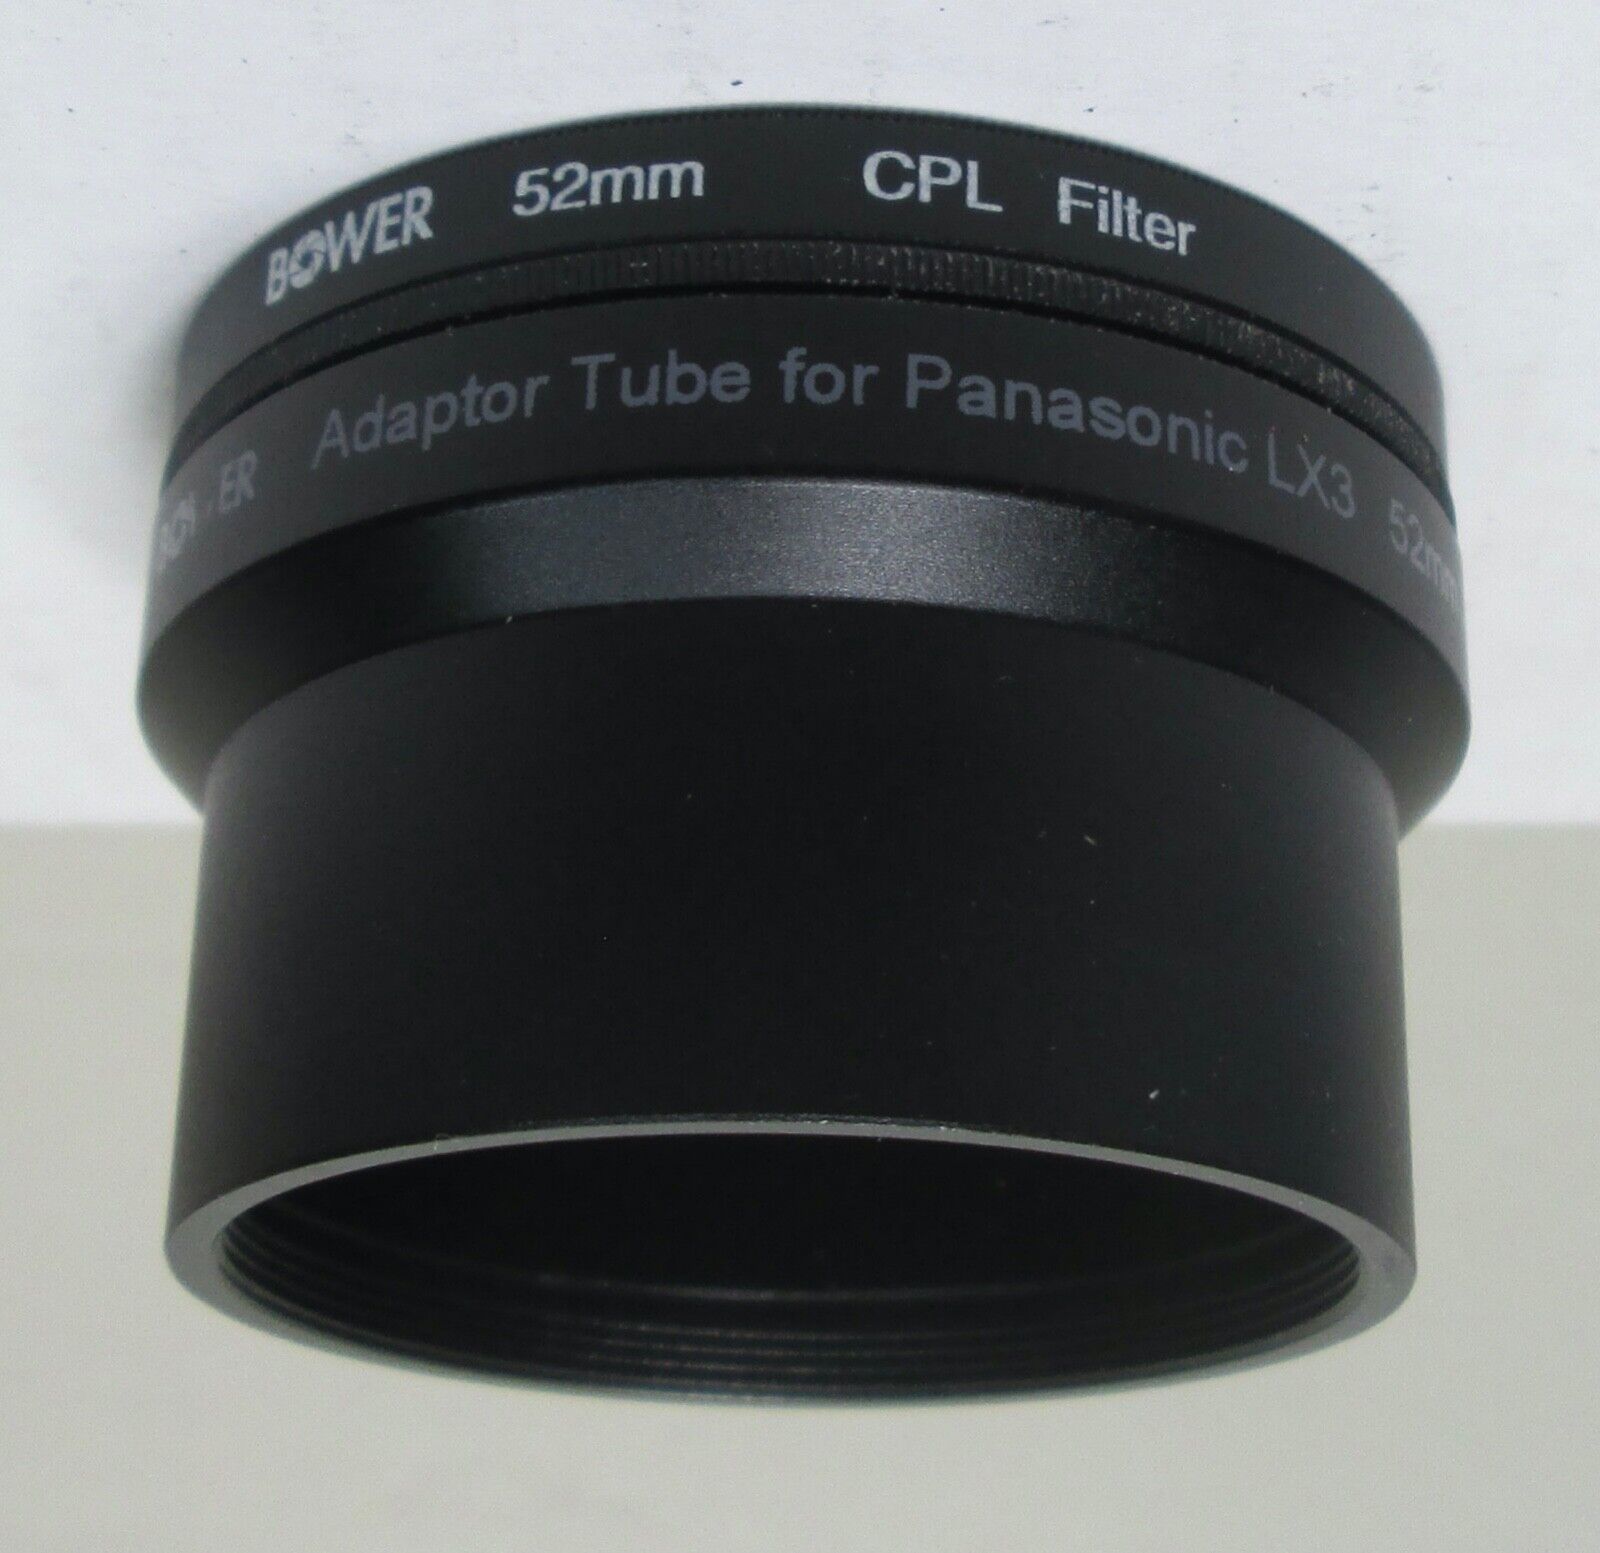 Bower 52mm Adapter Tube for Panasonic DMC-LX3 Digital Camera - READ - $14.24